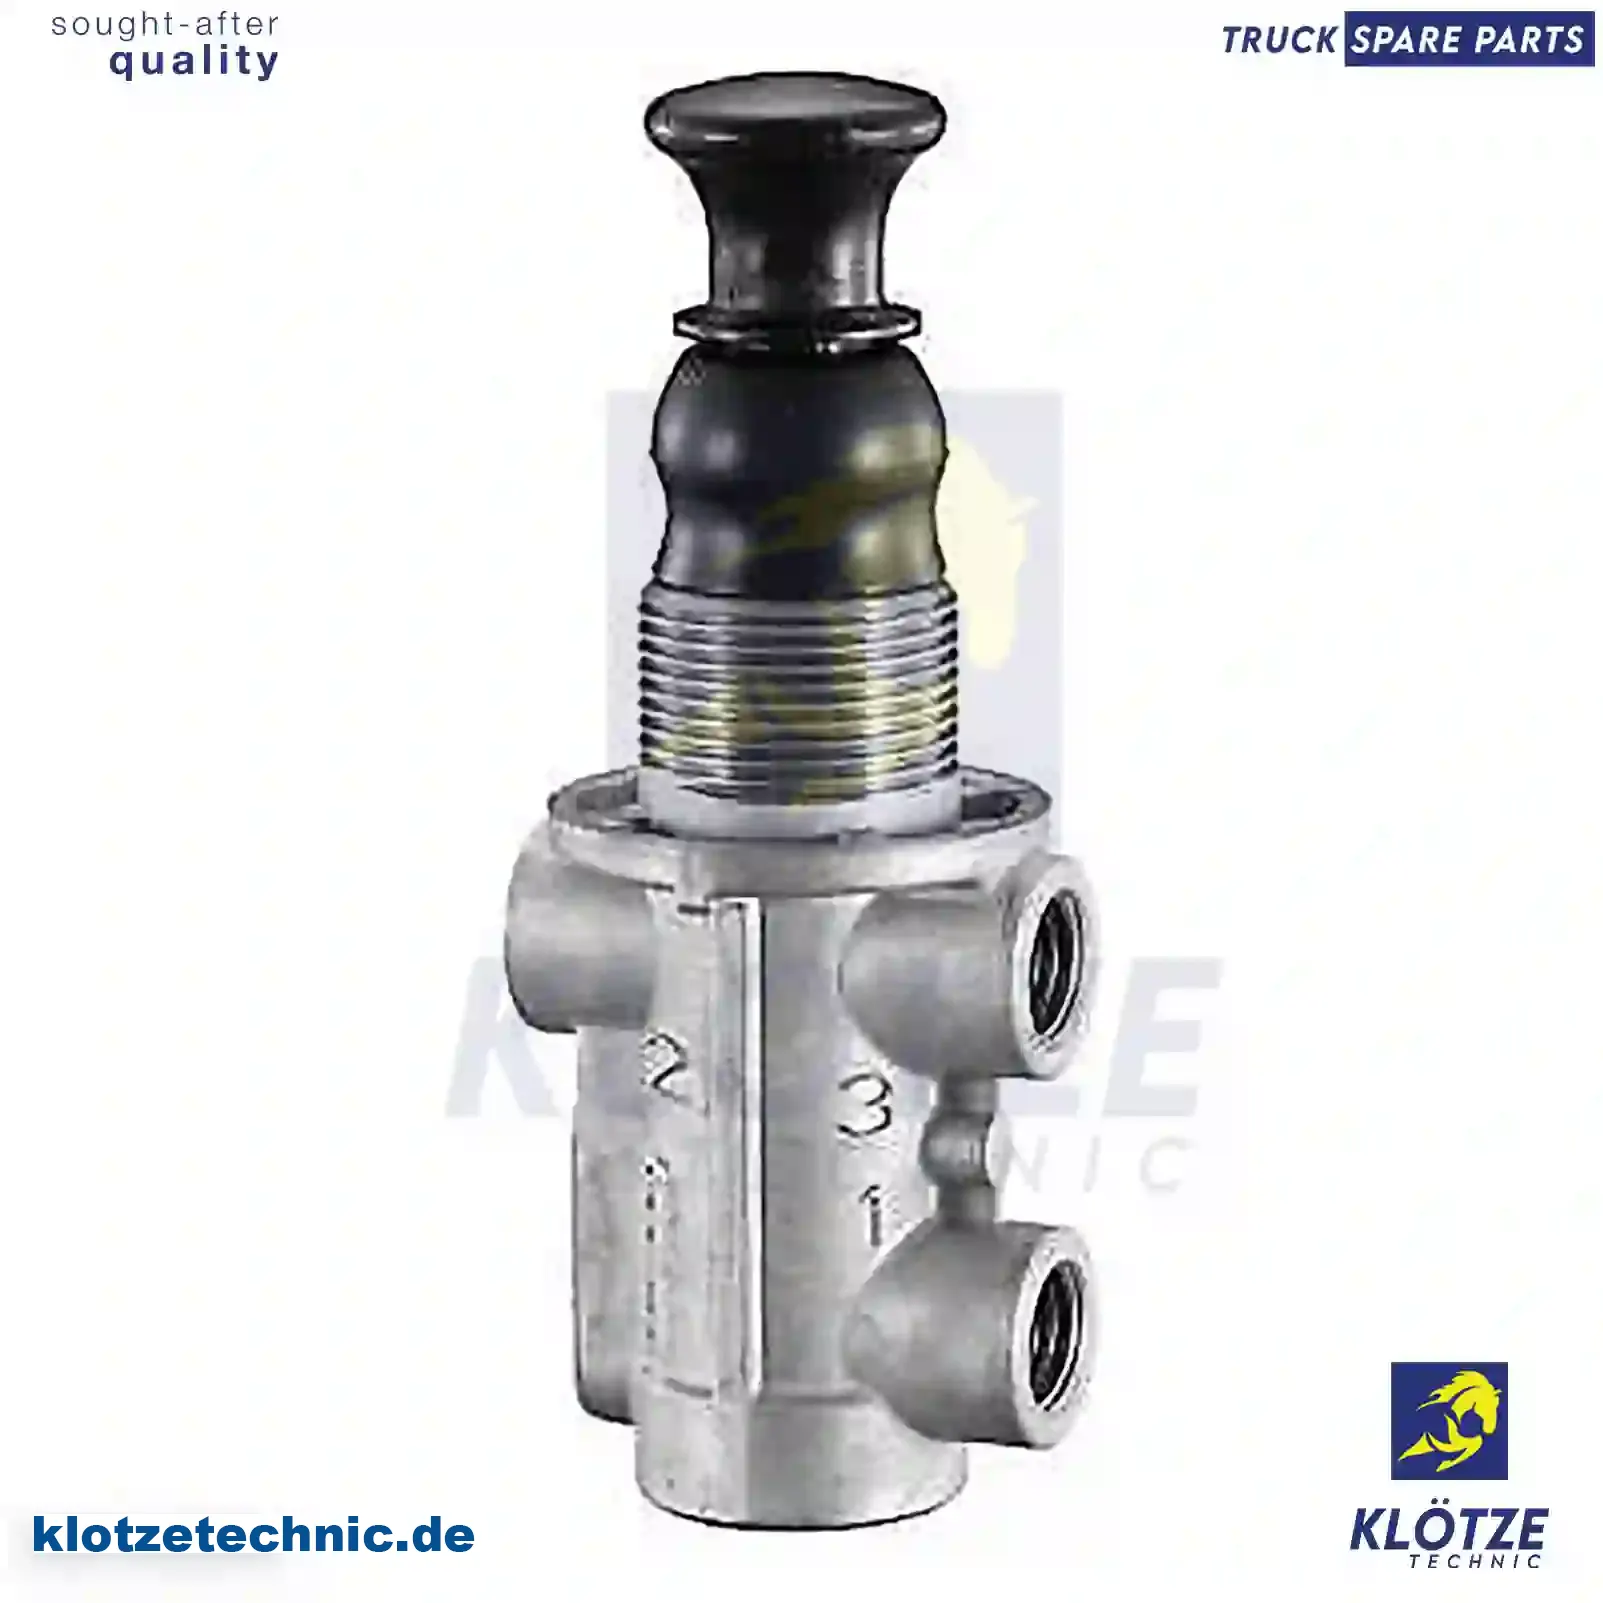 Multiway valve, 81516106007, 5021171220, 1326521